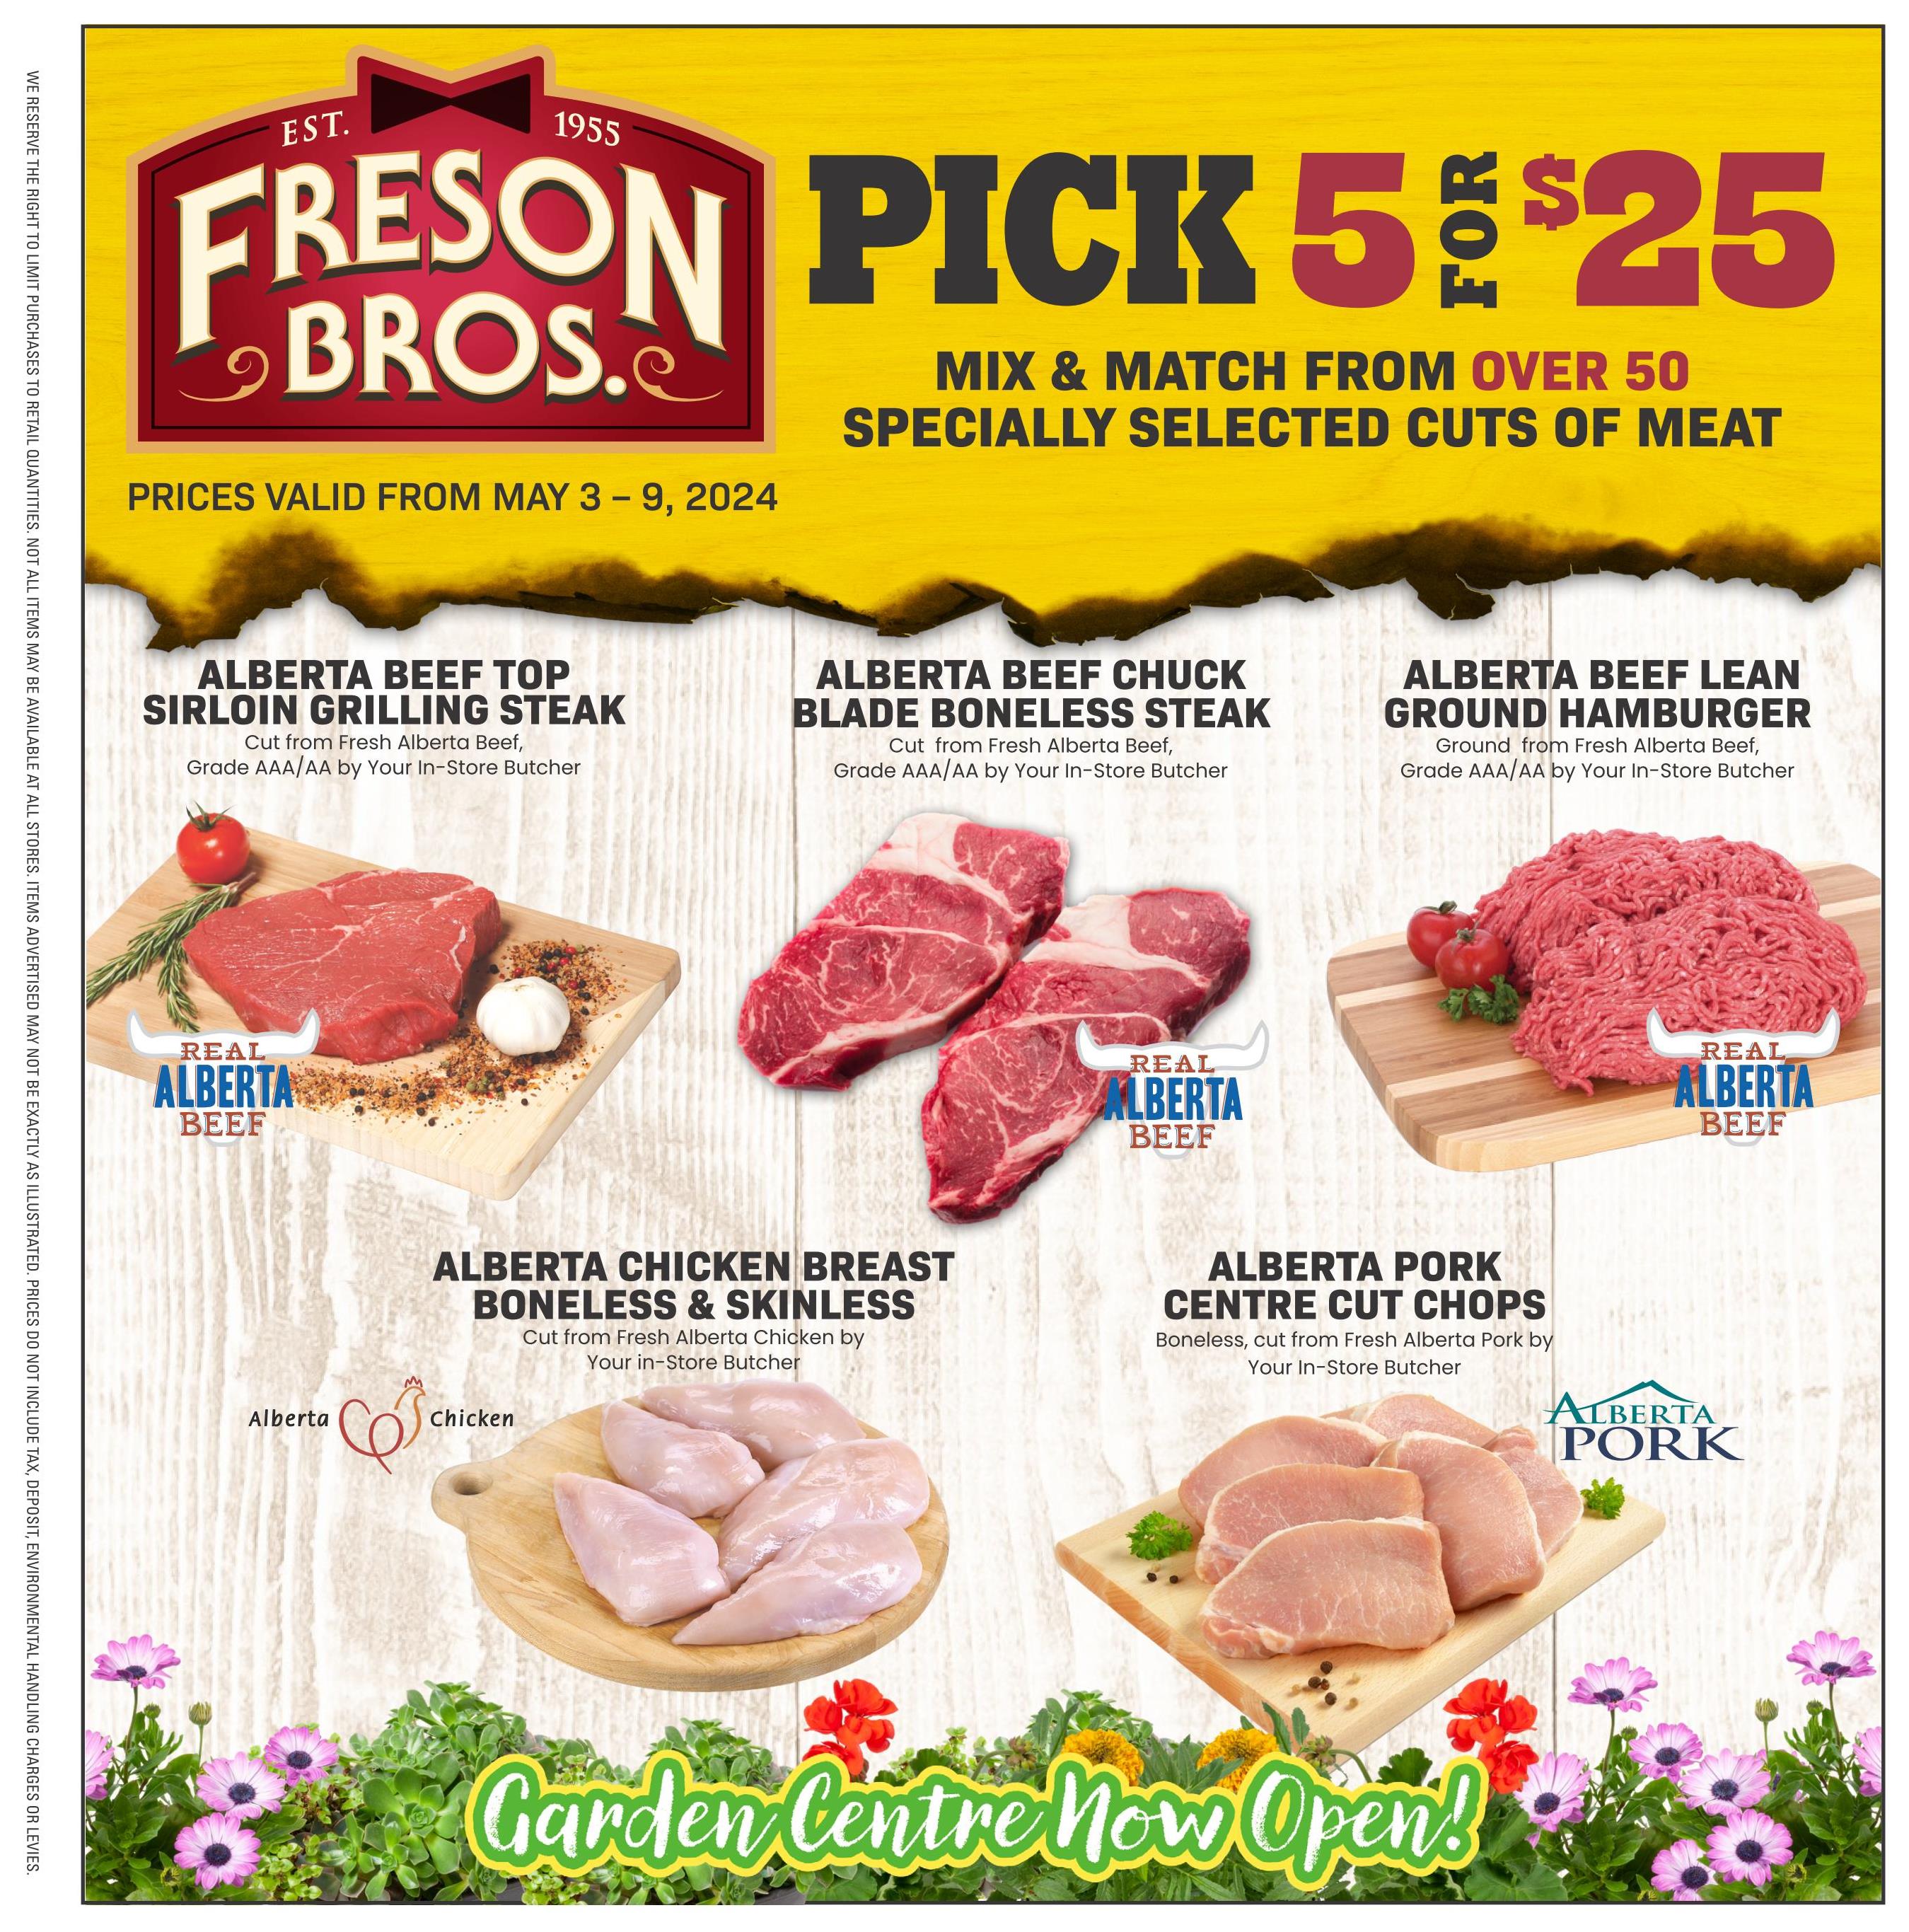 Freson Bros - Weekly Flyer Specials